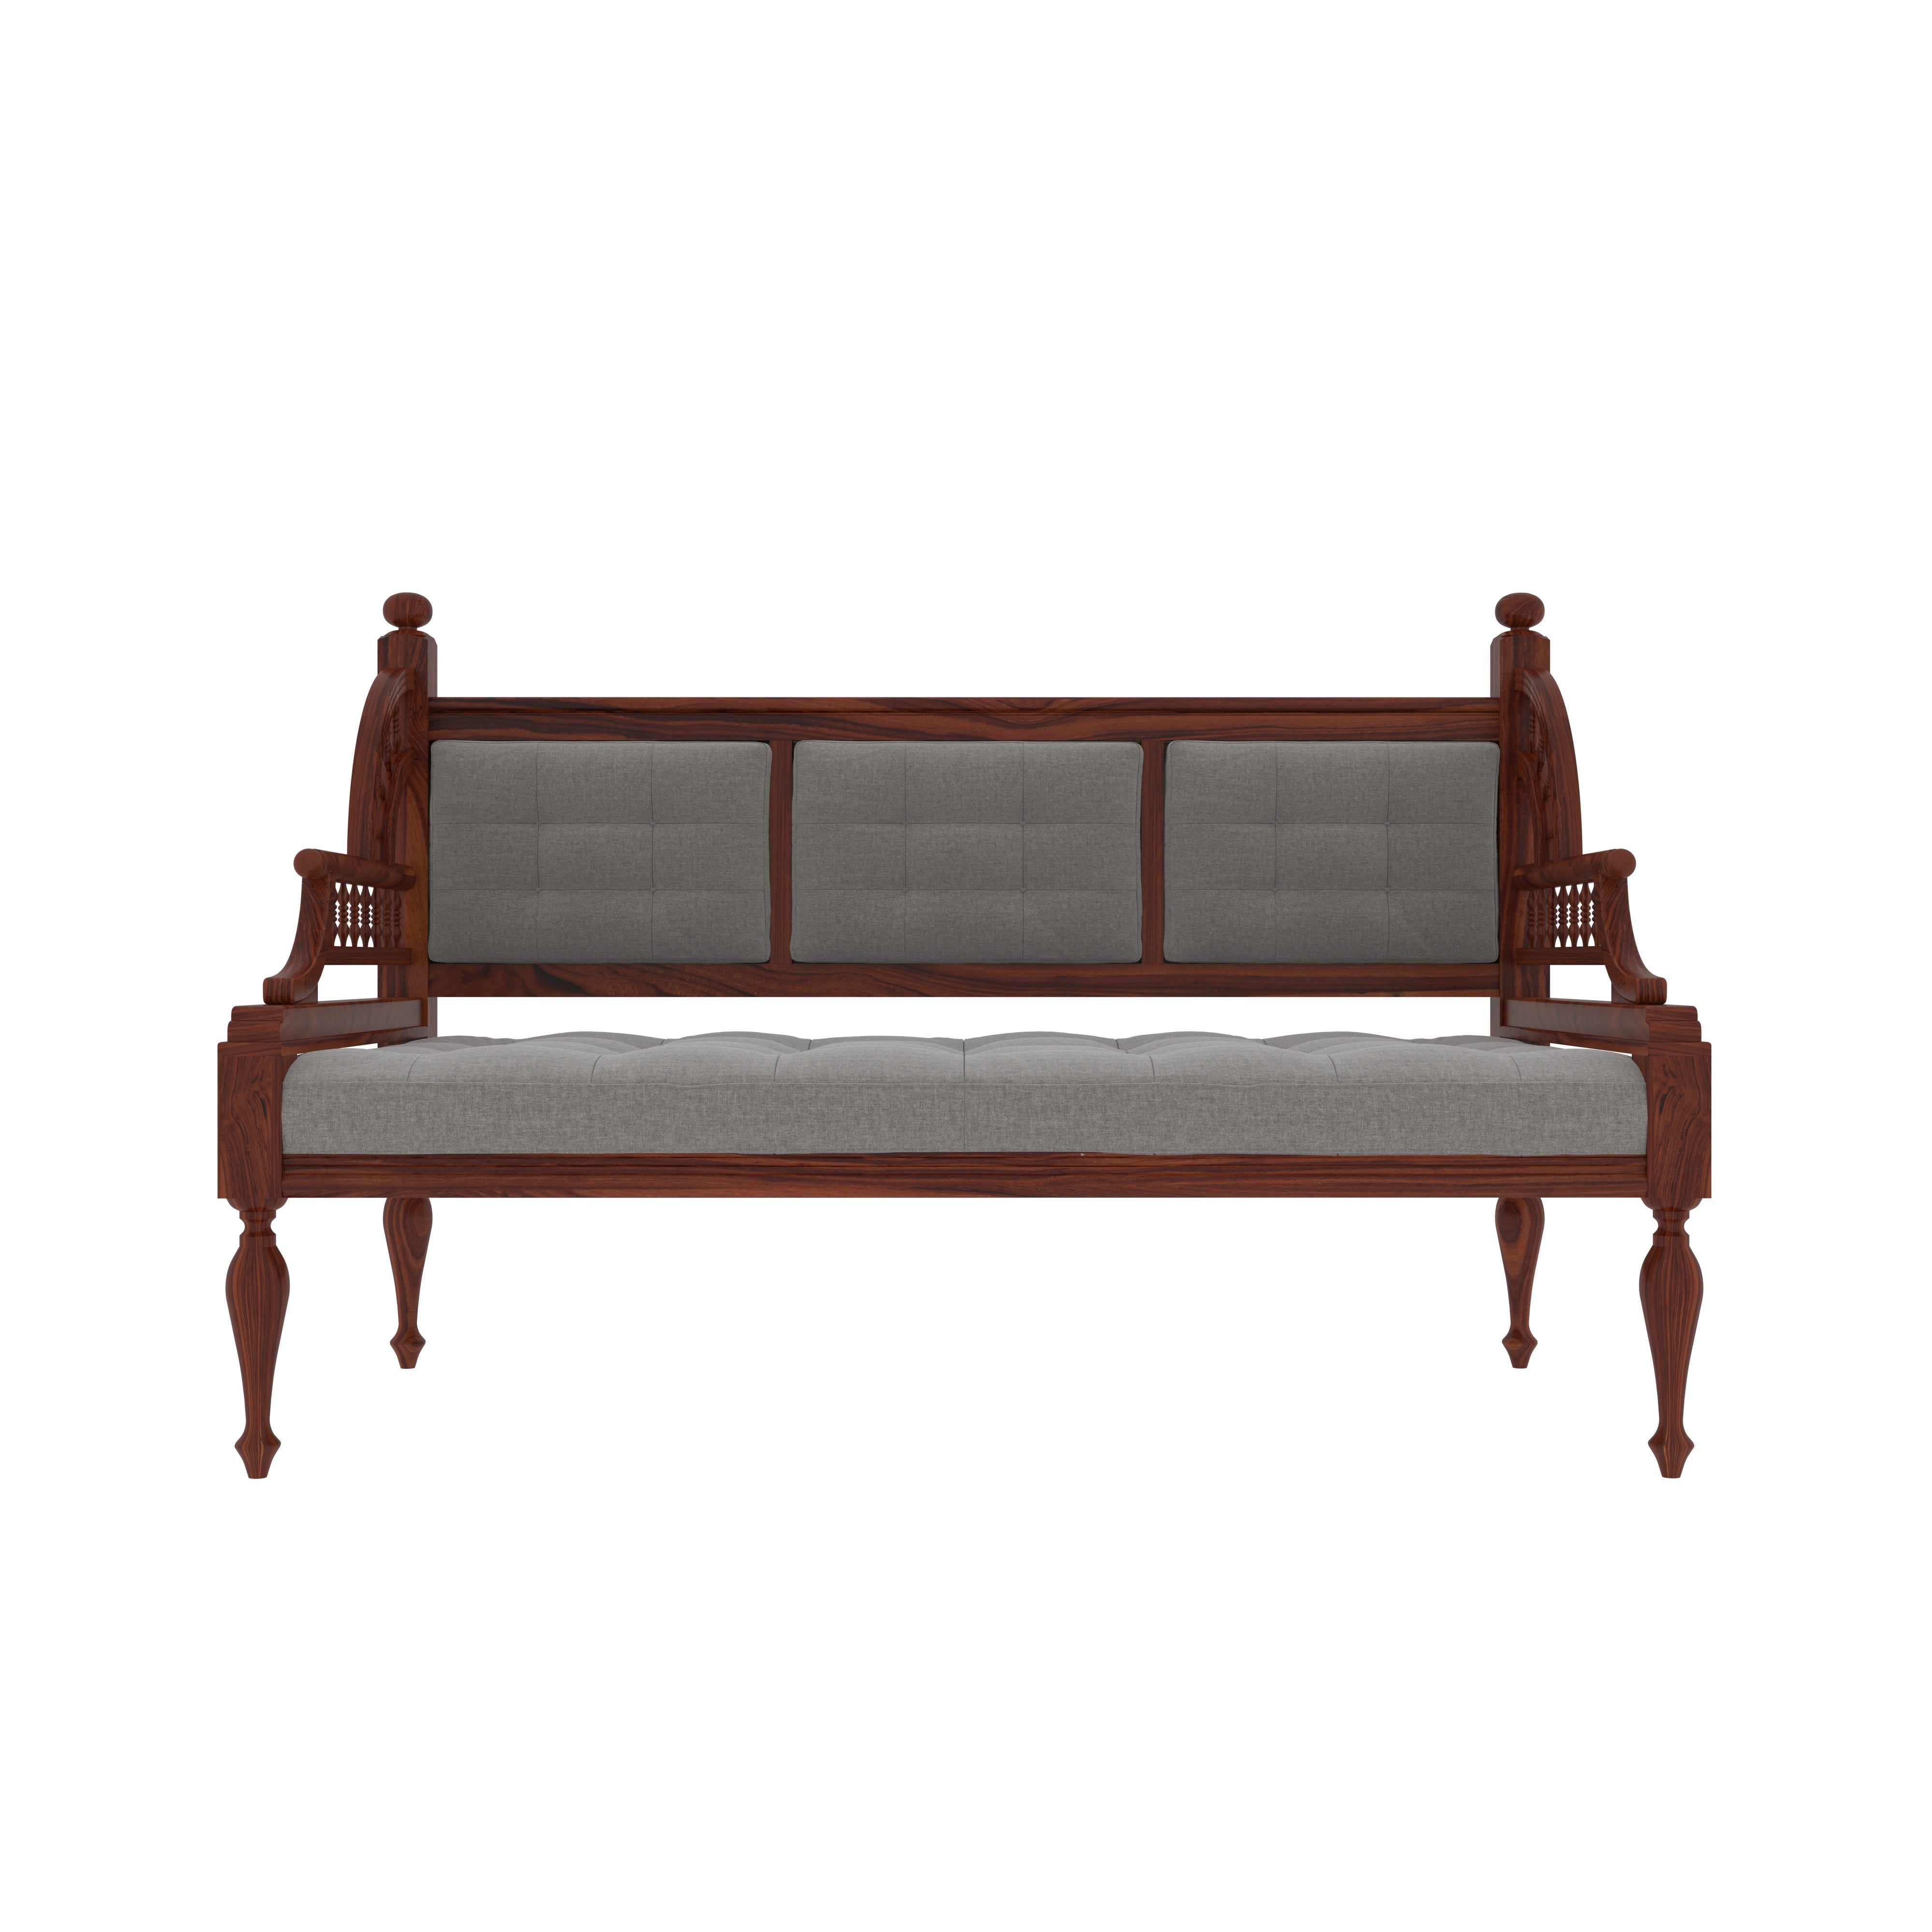 Traditional South Indian three-seater sofa design Sofa